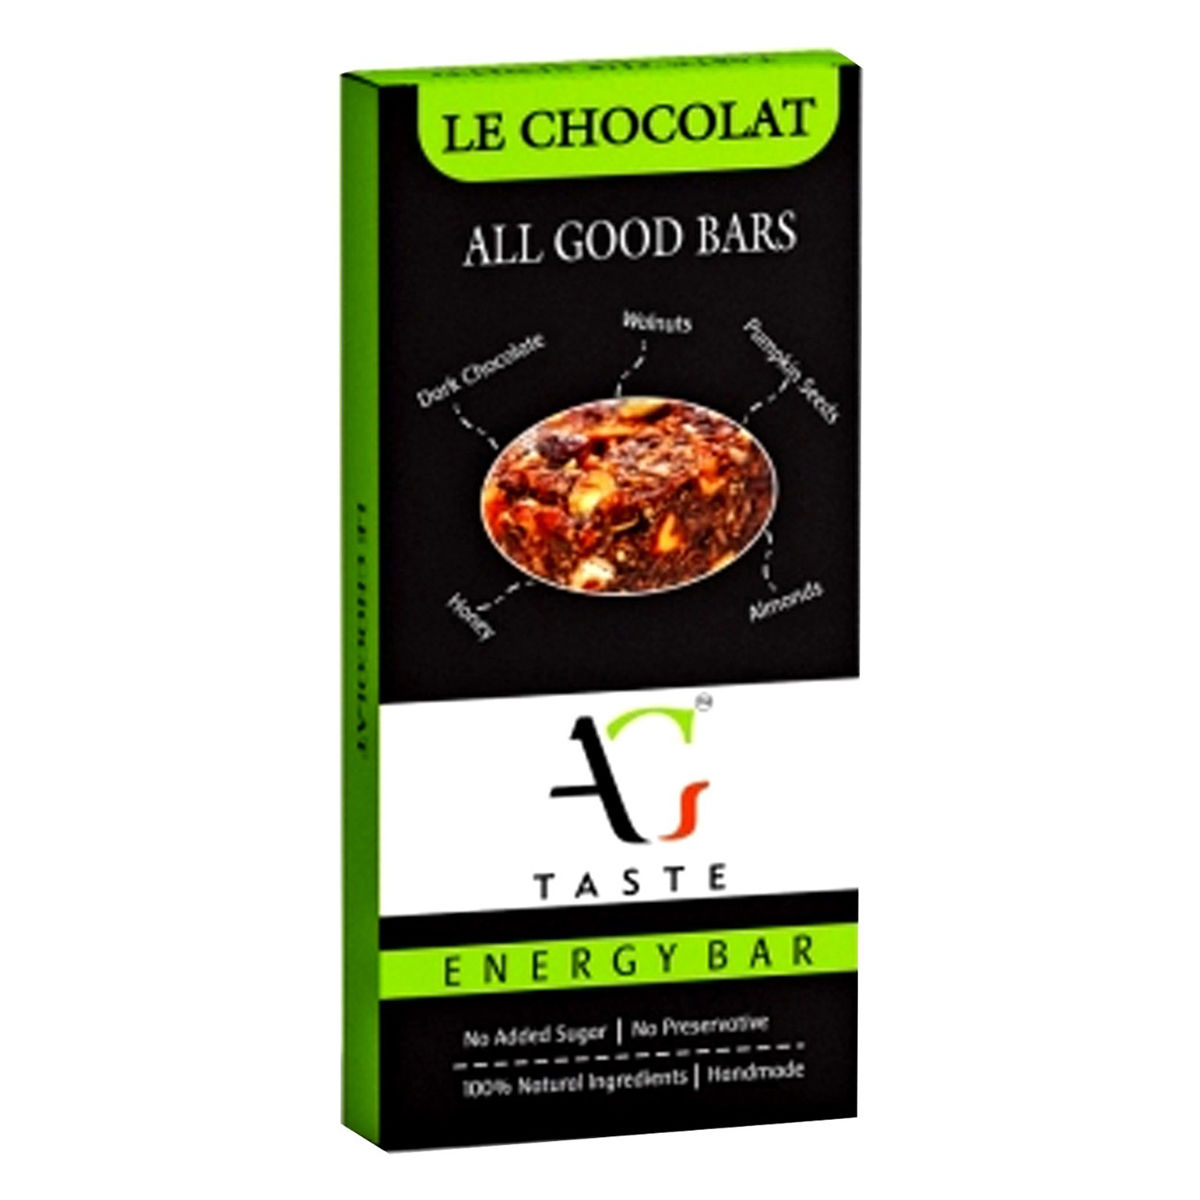 Buy All Good Bars Le Chocolat Energy Bar, 30 gm Online